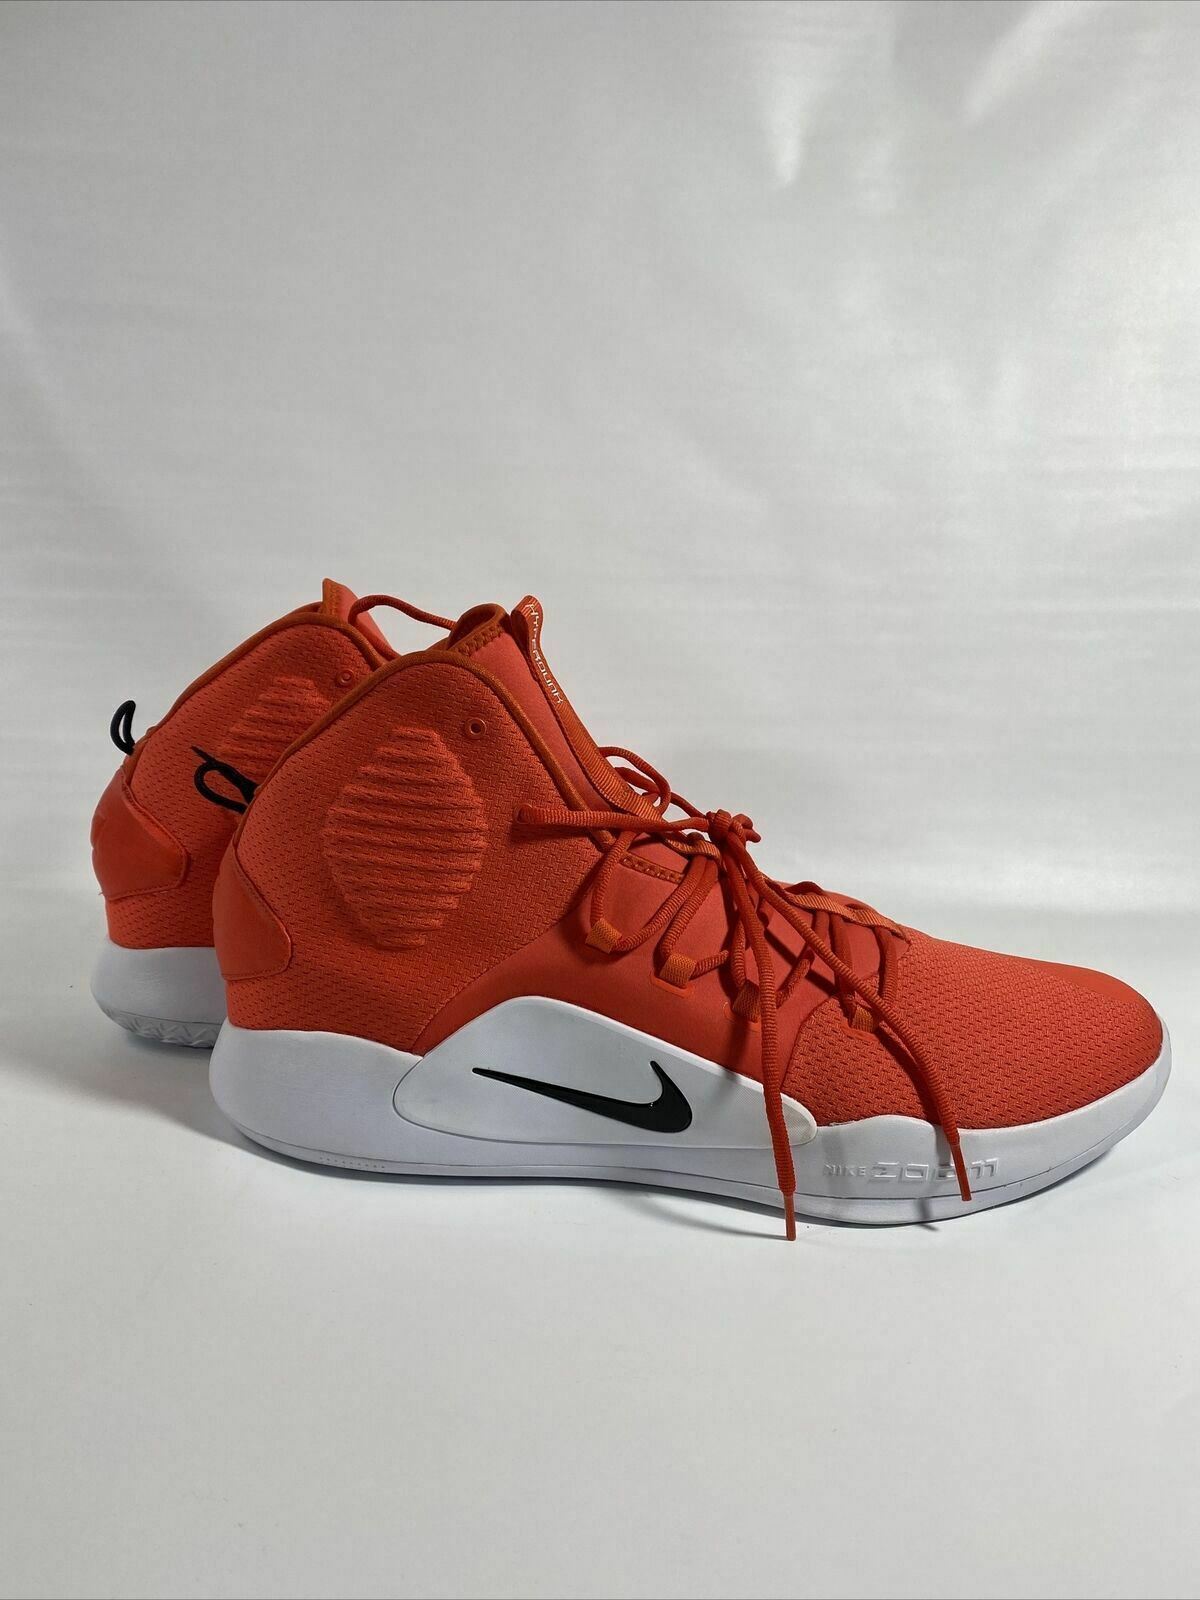 Nike Hyperdunk Men's Basketball Shoes Orange/White Size  Size 21 Large Shoes